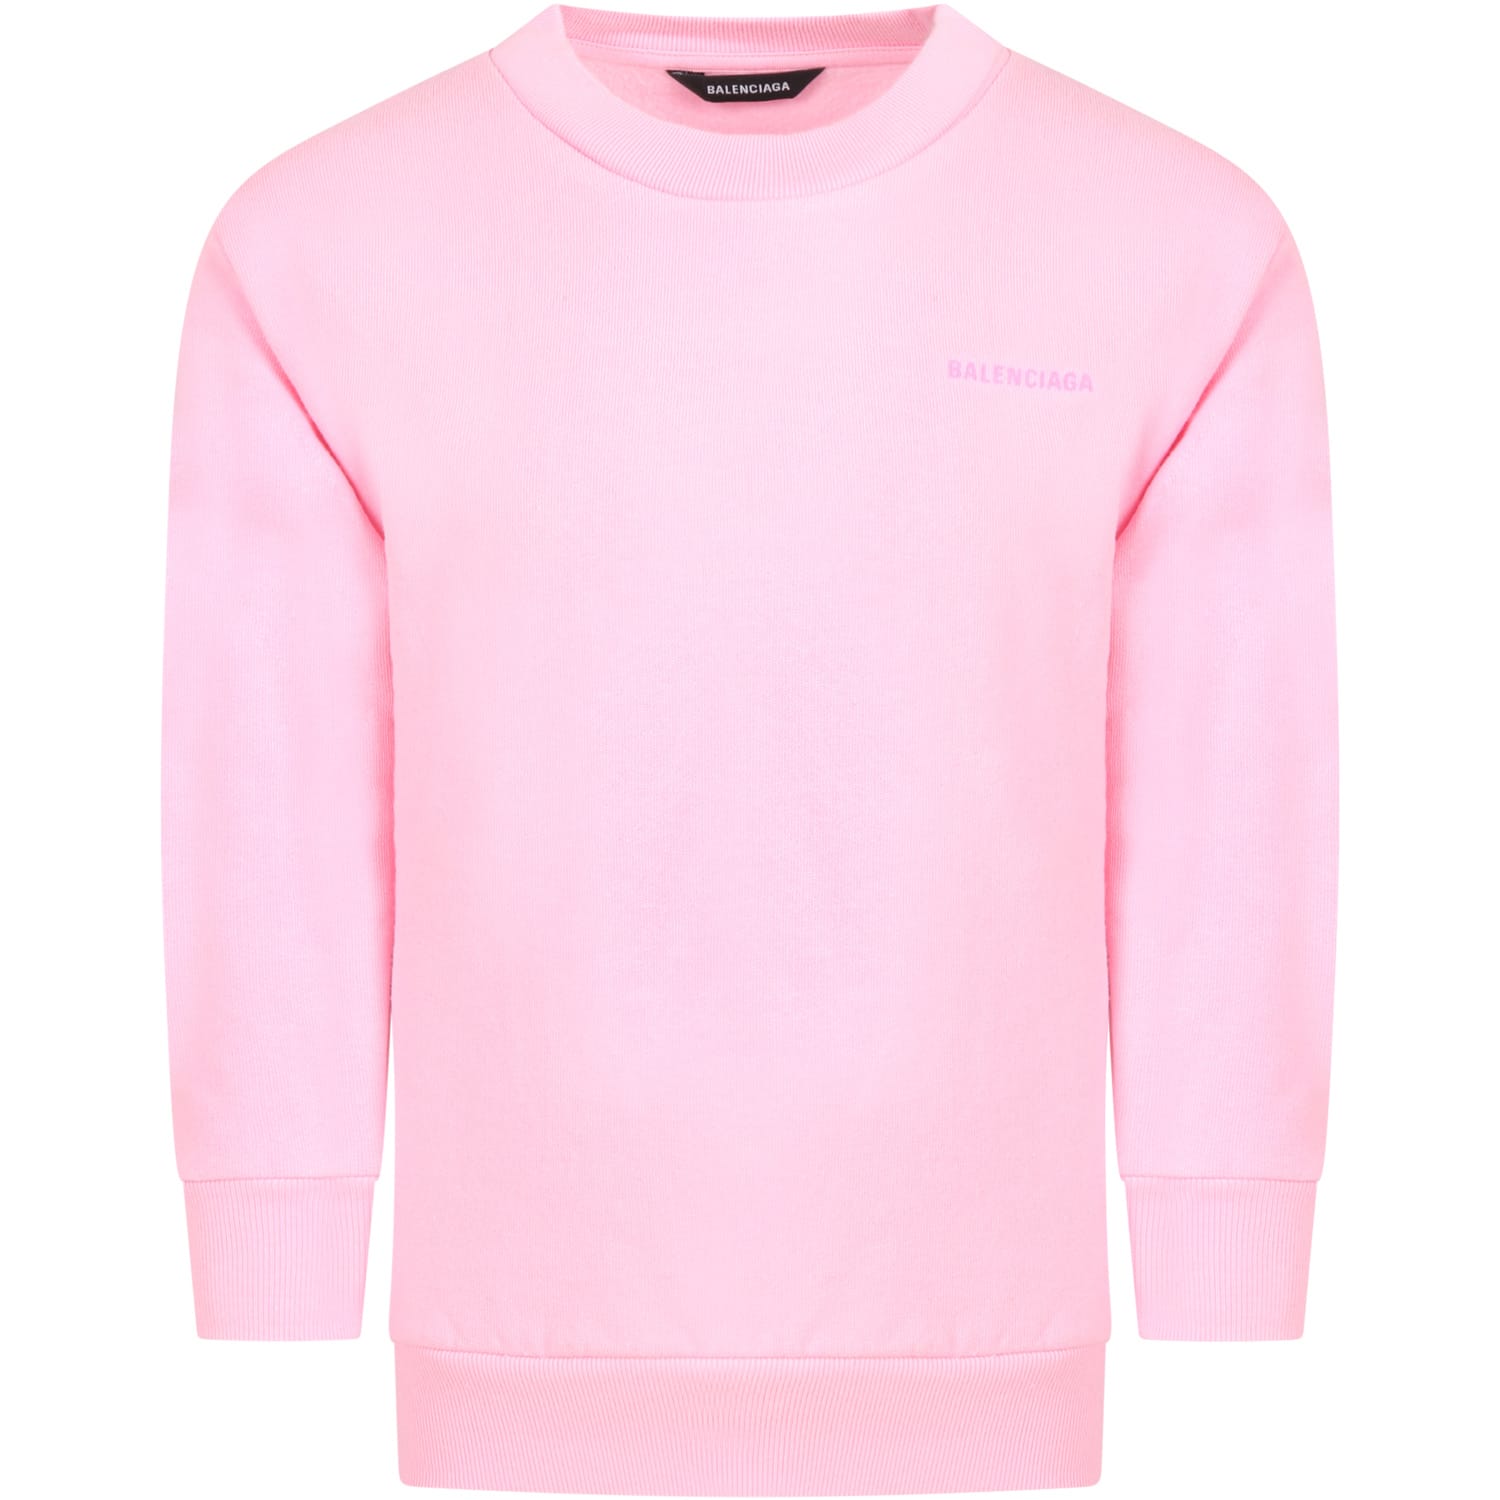 Balenciaga Pink Sweatshirt For Girl With Logo